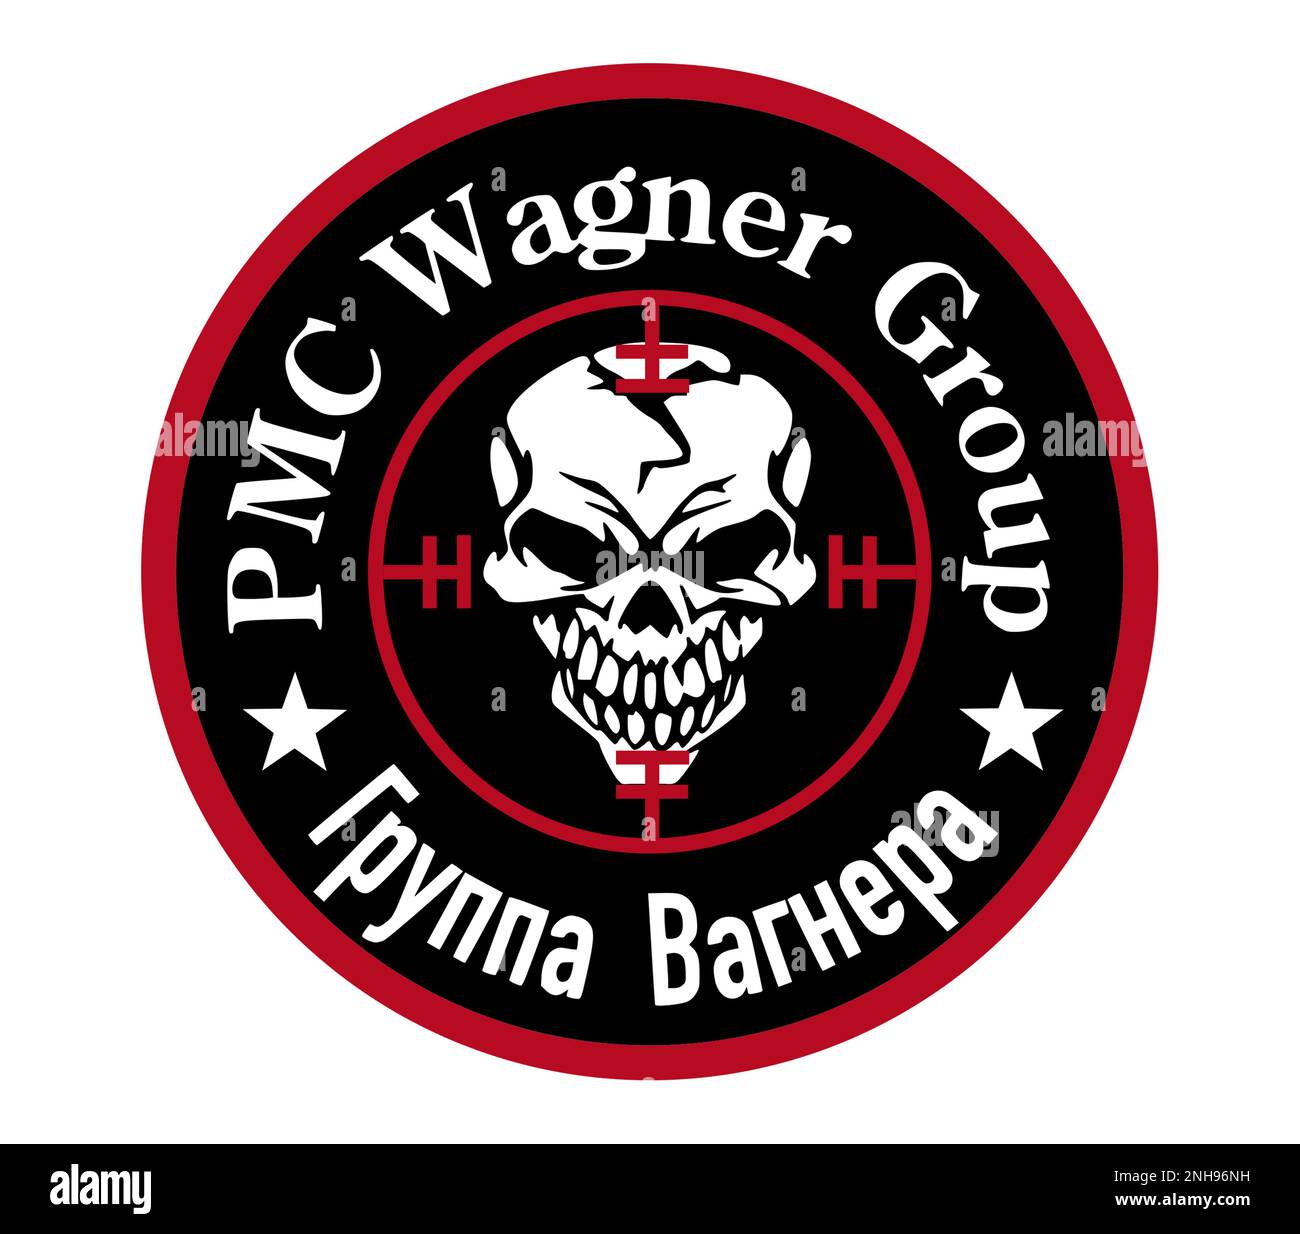 Wagner Group - Russian paramilitary organization logo Stock Photo